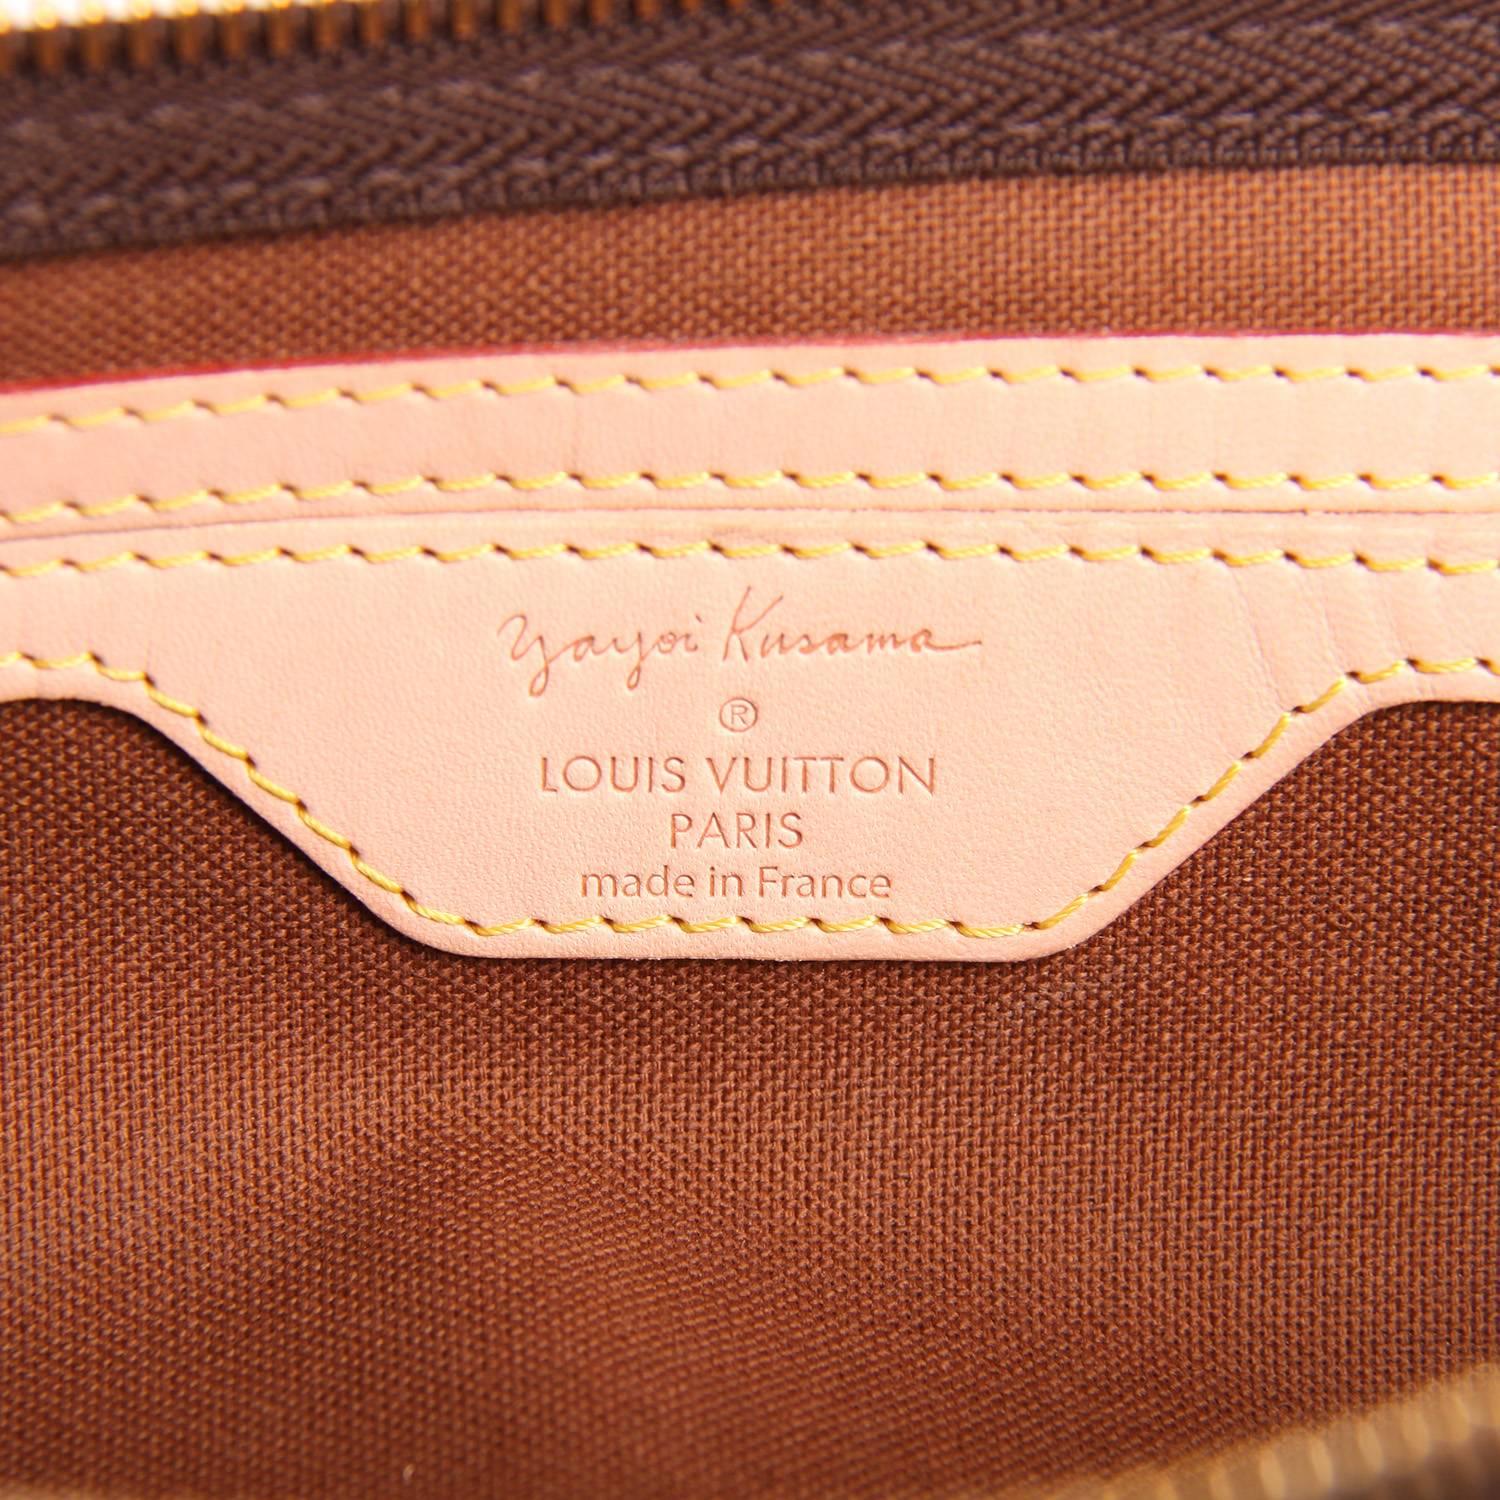 Louis Vuitton Limited Edition Green Yayoi Kusama Speedy 30 Satchel at ...